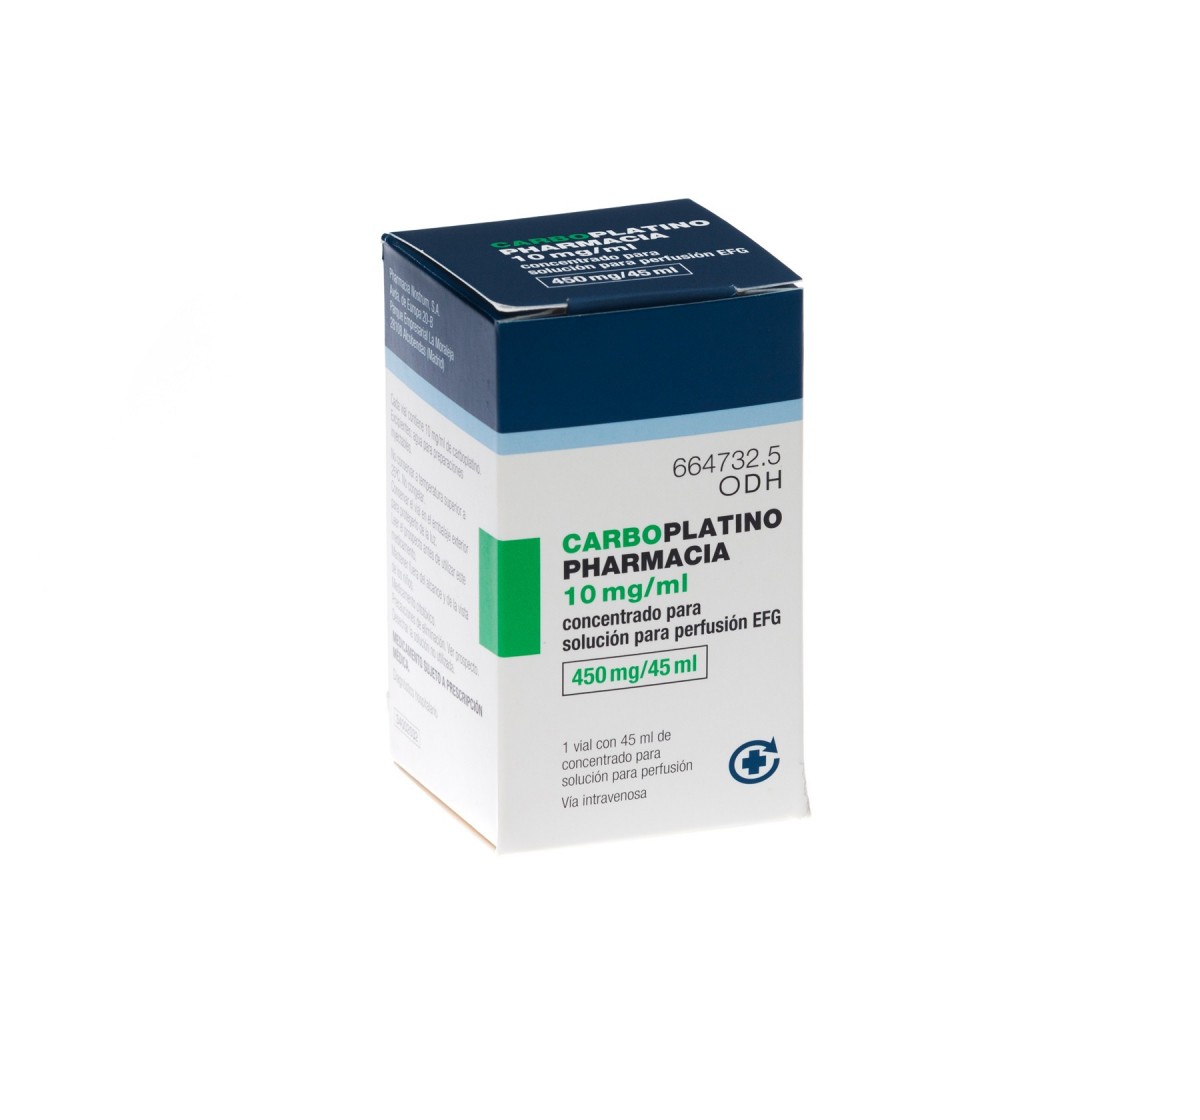 CARBOPLATINO PHARMACIA 10 mg/ml CONCENTRADO PARA SOLUCION PARA PERFUSION EFG, 1 vial de 15 ml fotografía del envase.